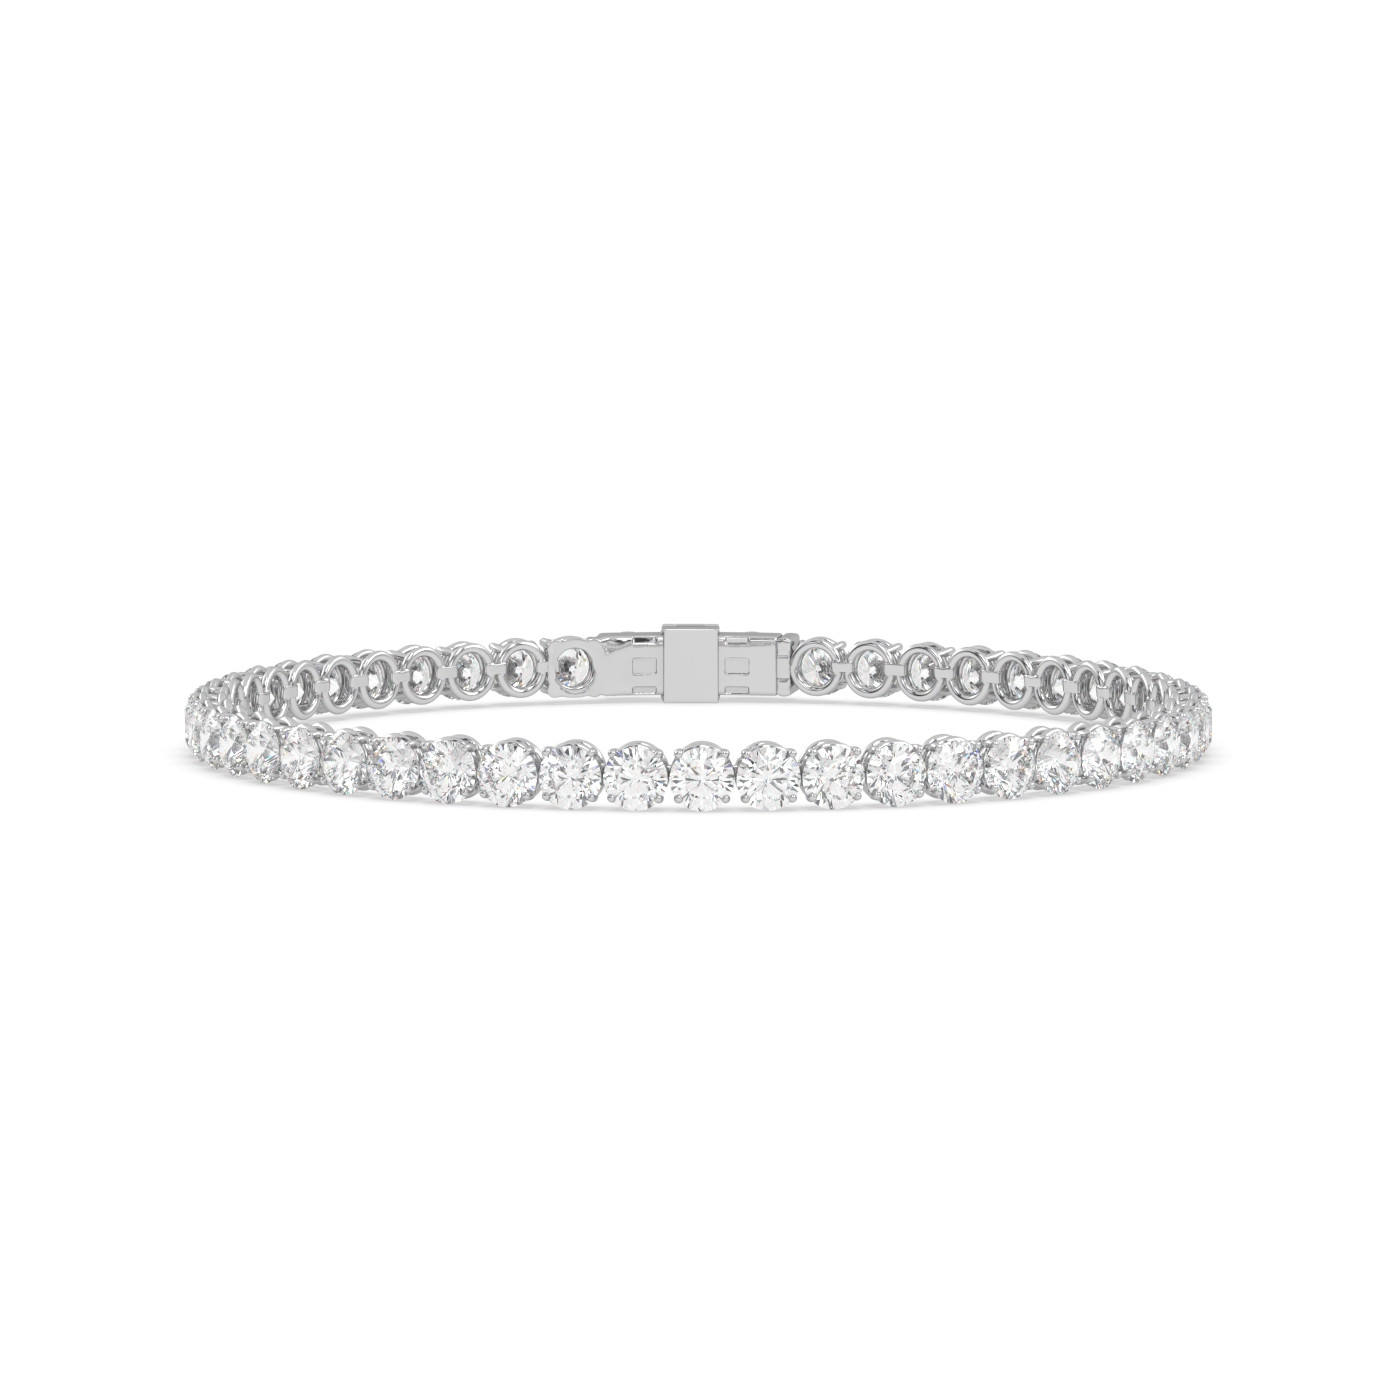 18k white gold 13 carat round diamond tennis bracelet with modern american lock system Photos & images